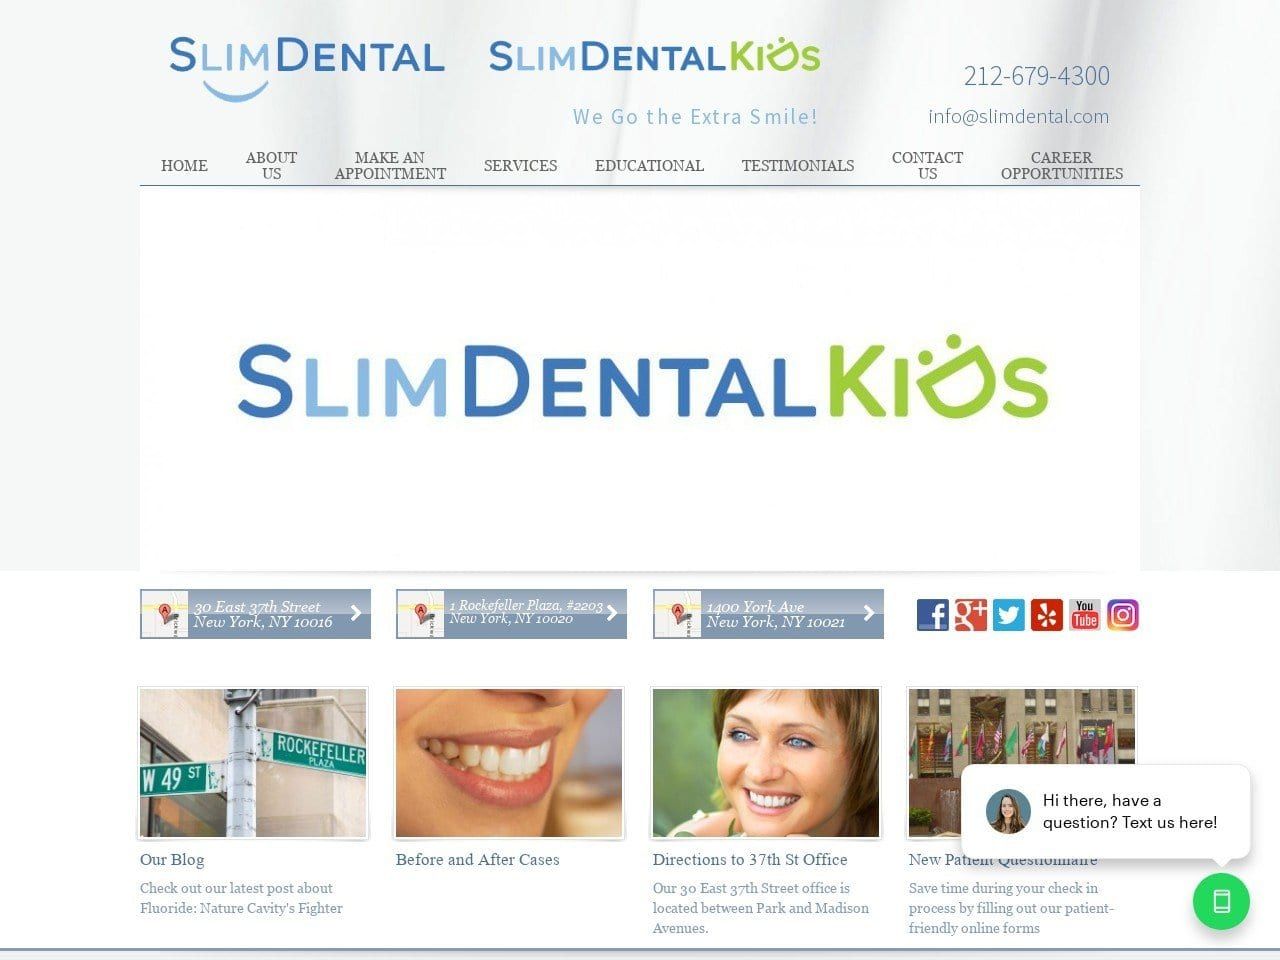 Stephen Lim Dds Dentist Website Screenshot from slimdental.com